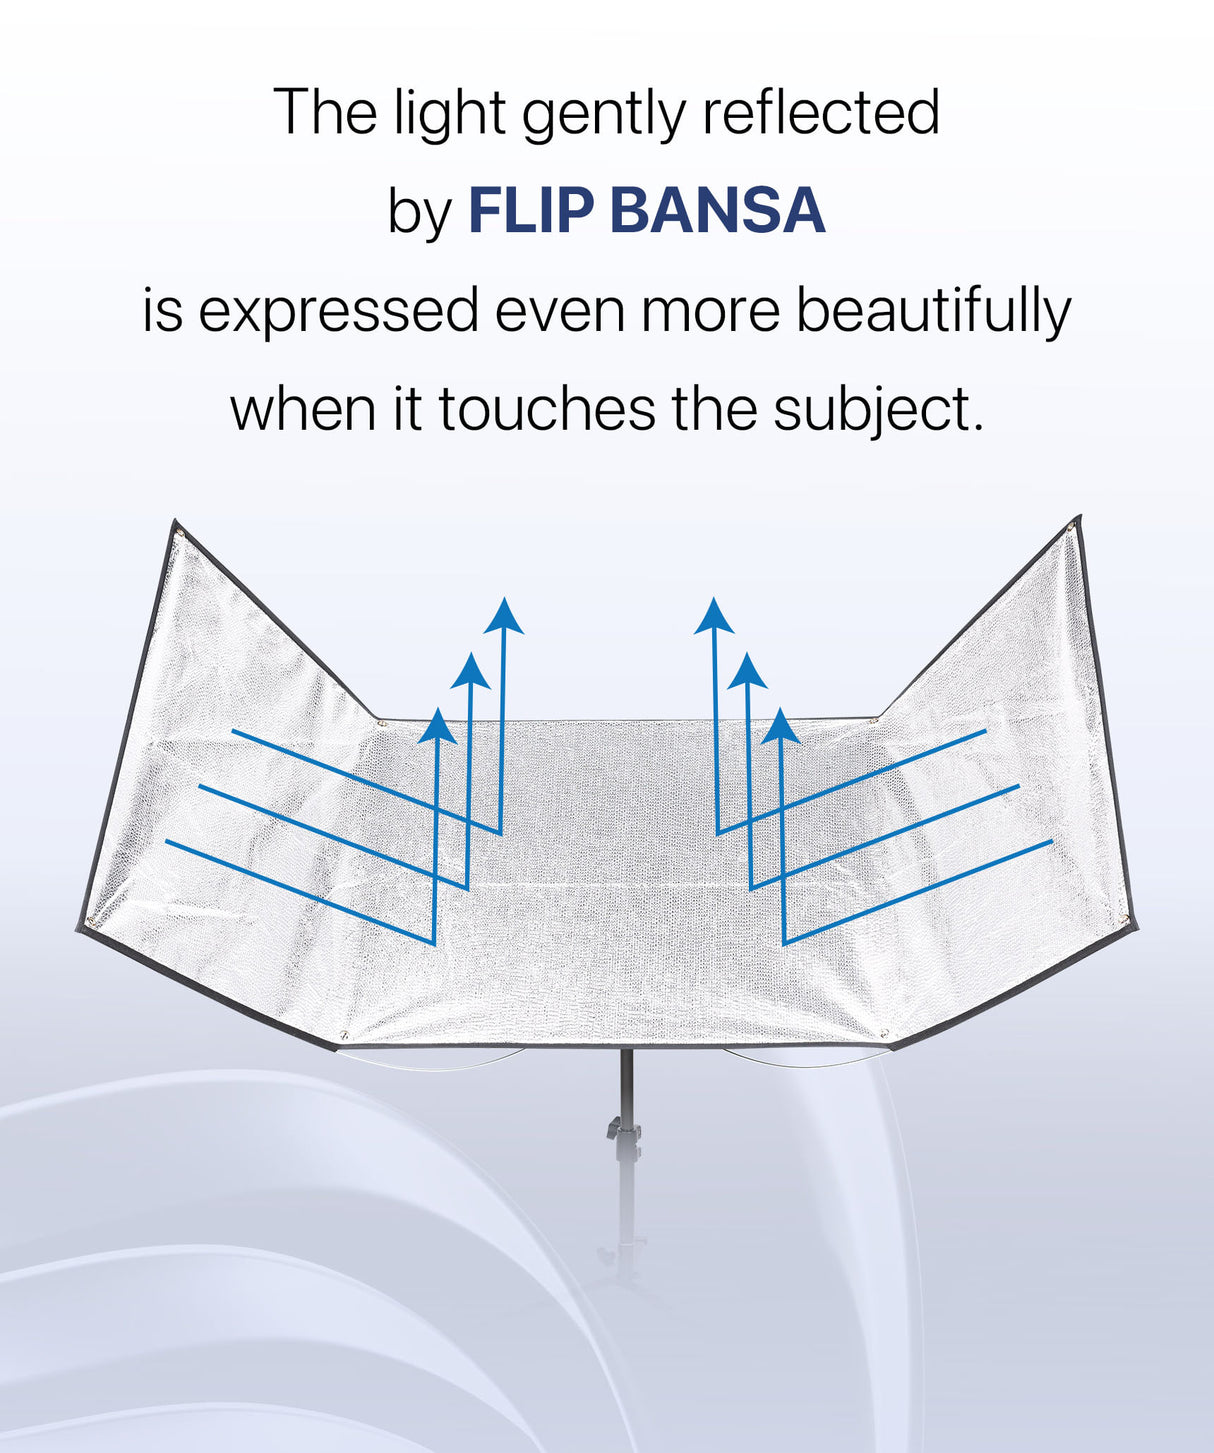 FLIP BANSA Curved Reflector